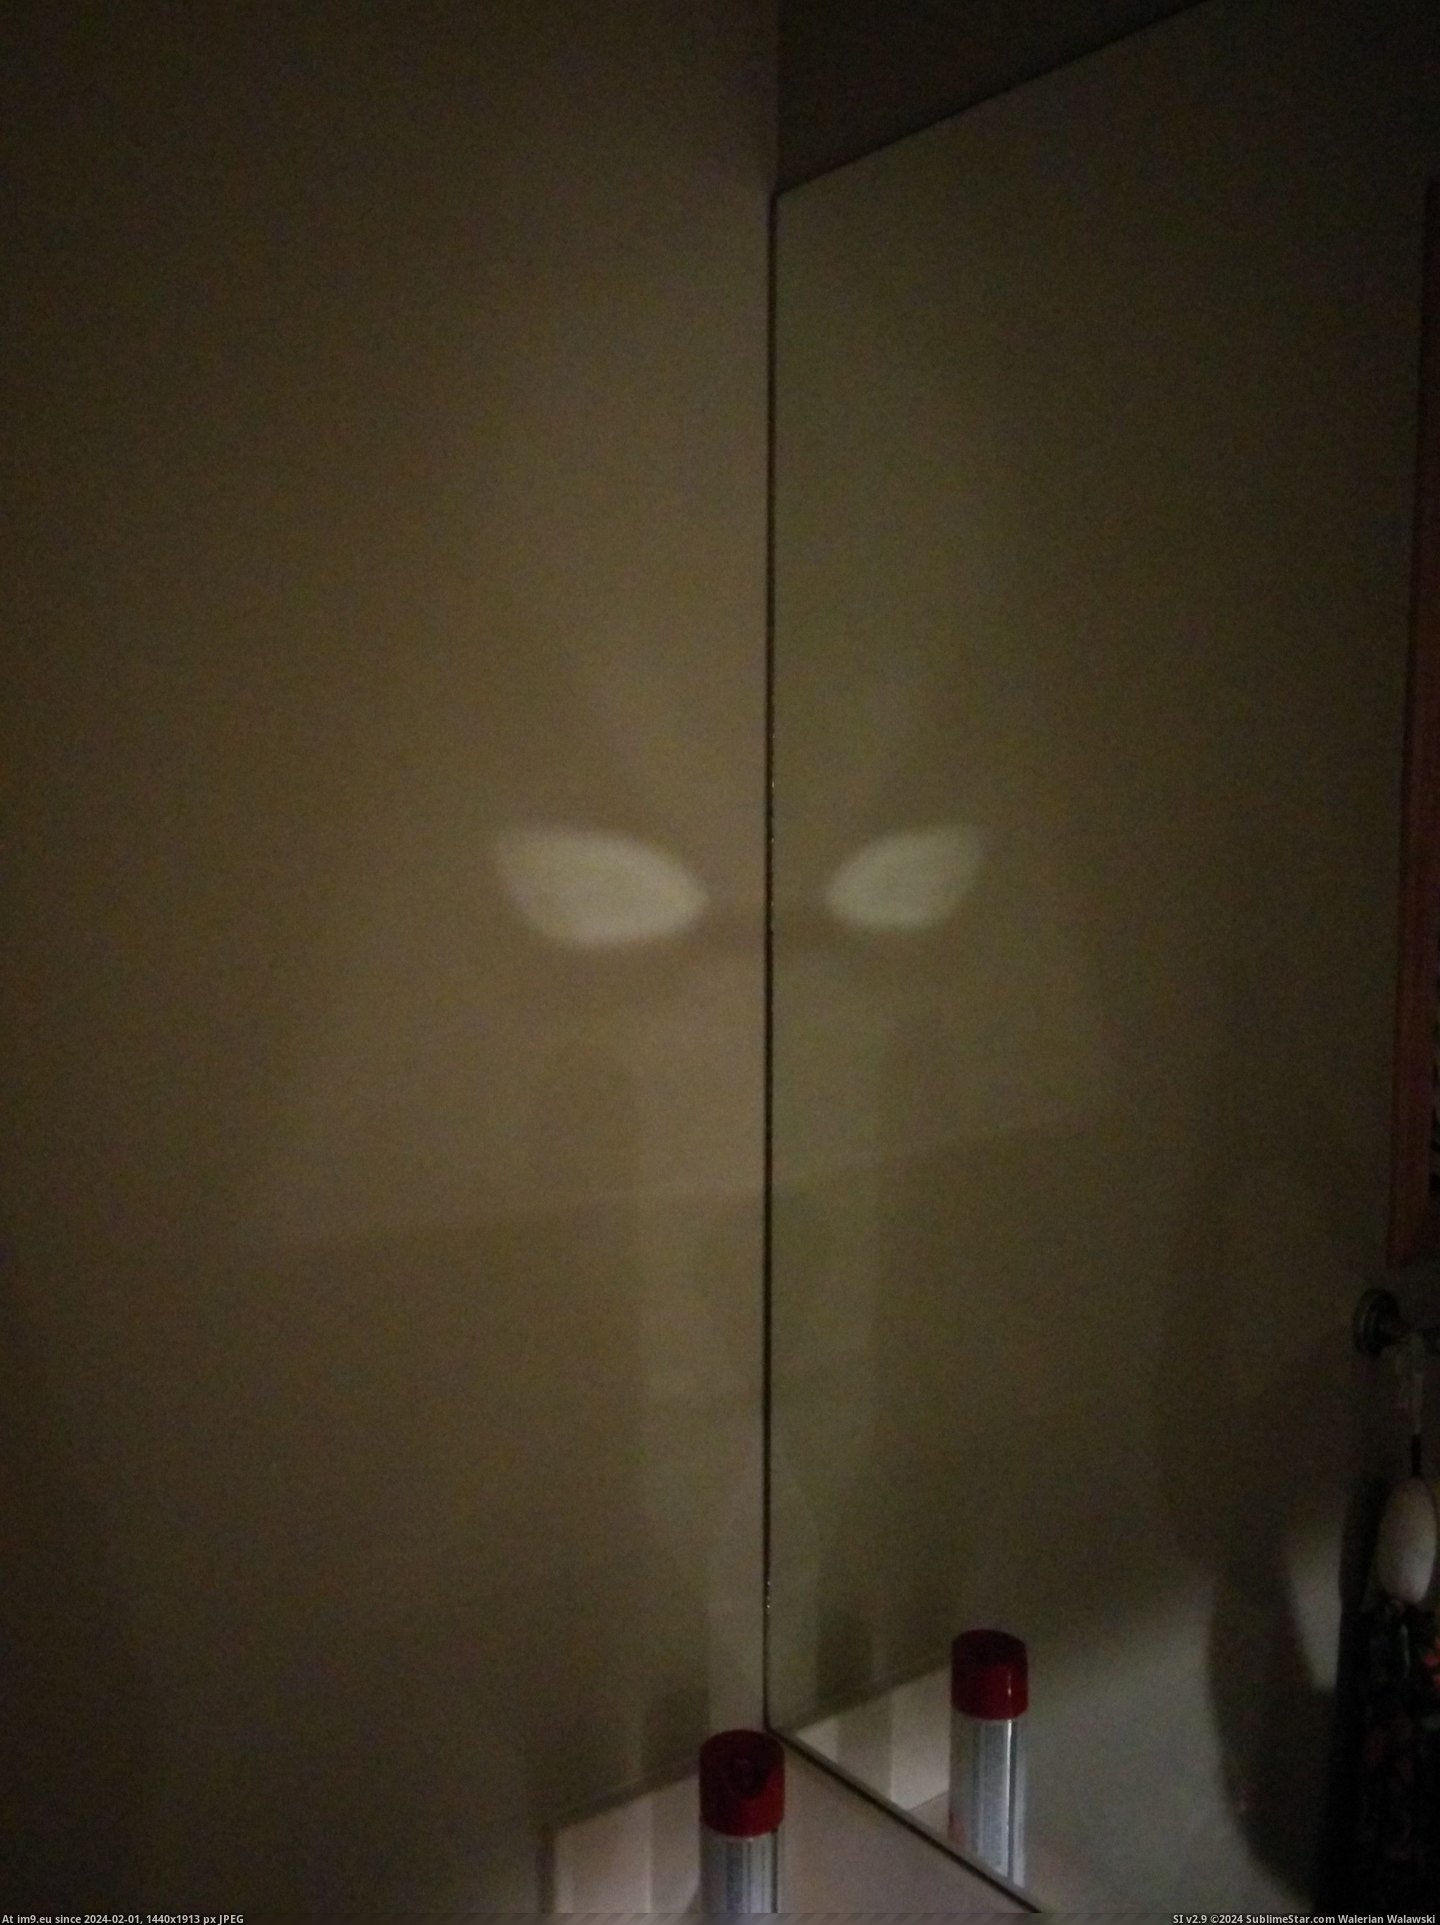 #Mirror #Bathroom #Darth #Vader #Wall #Reflection [Mildlyinteresting] Darth Vader reflection the bathroom mirror made against the wall Pic. (Изображение из альбом My r/MILDLYINTERESTING favs))